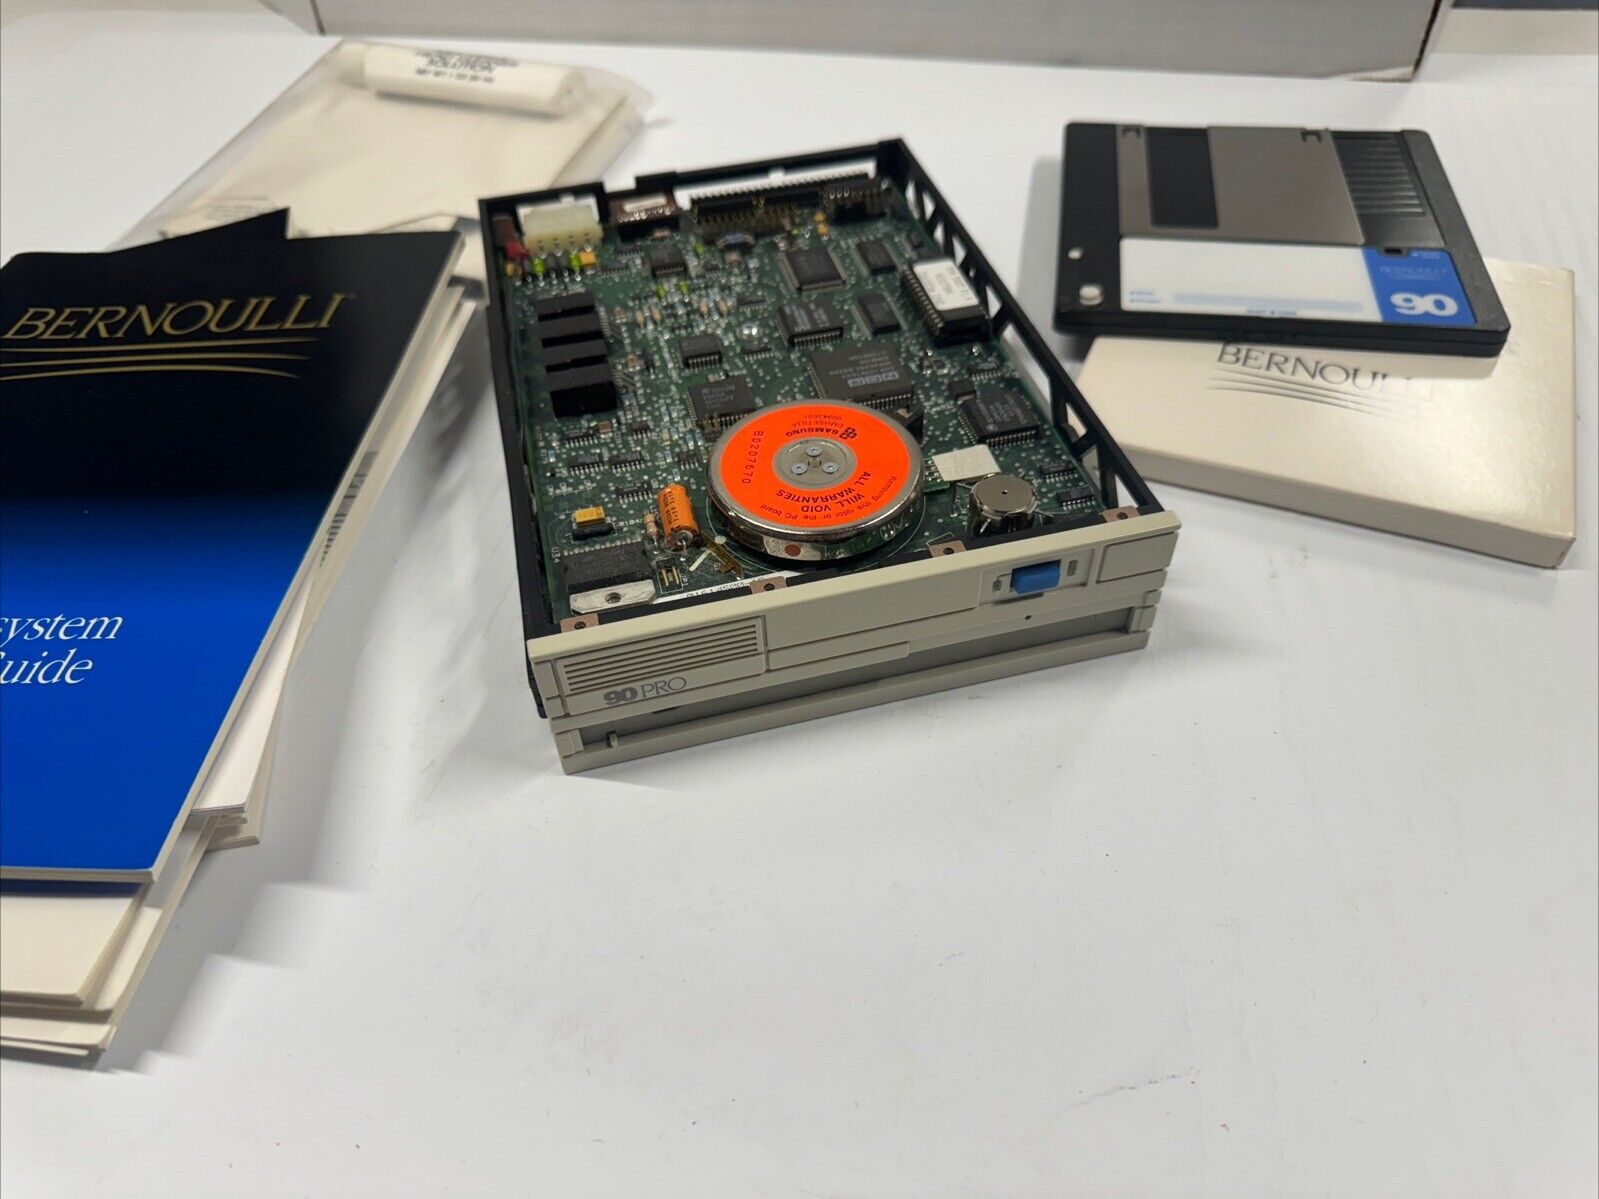 Iomega Bernoulli 90Pro Mac INTERNAL SCSI DRIVE - 2 disks, original manuals